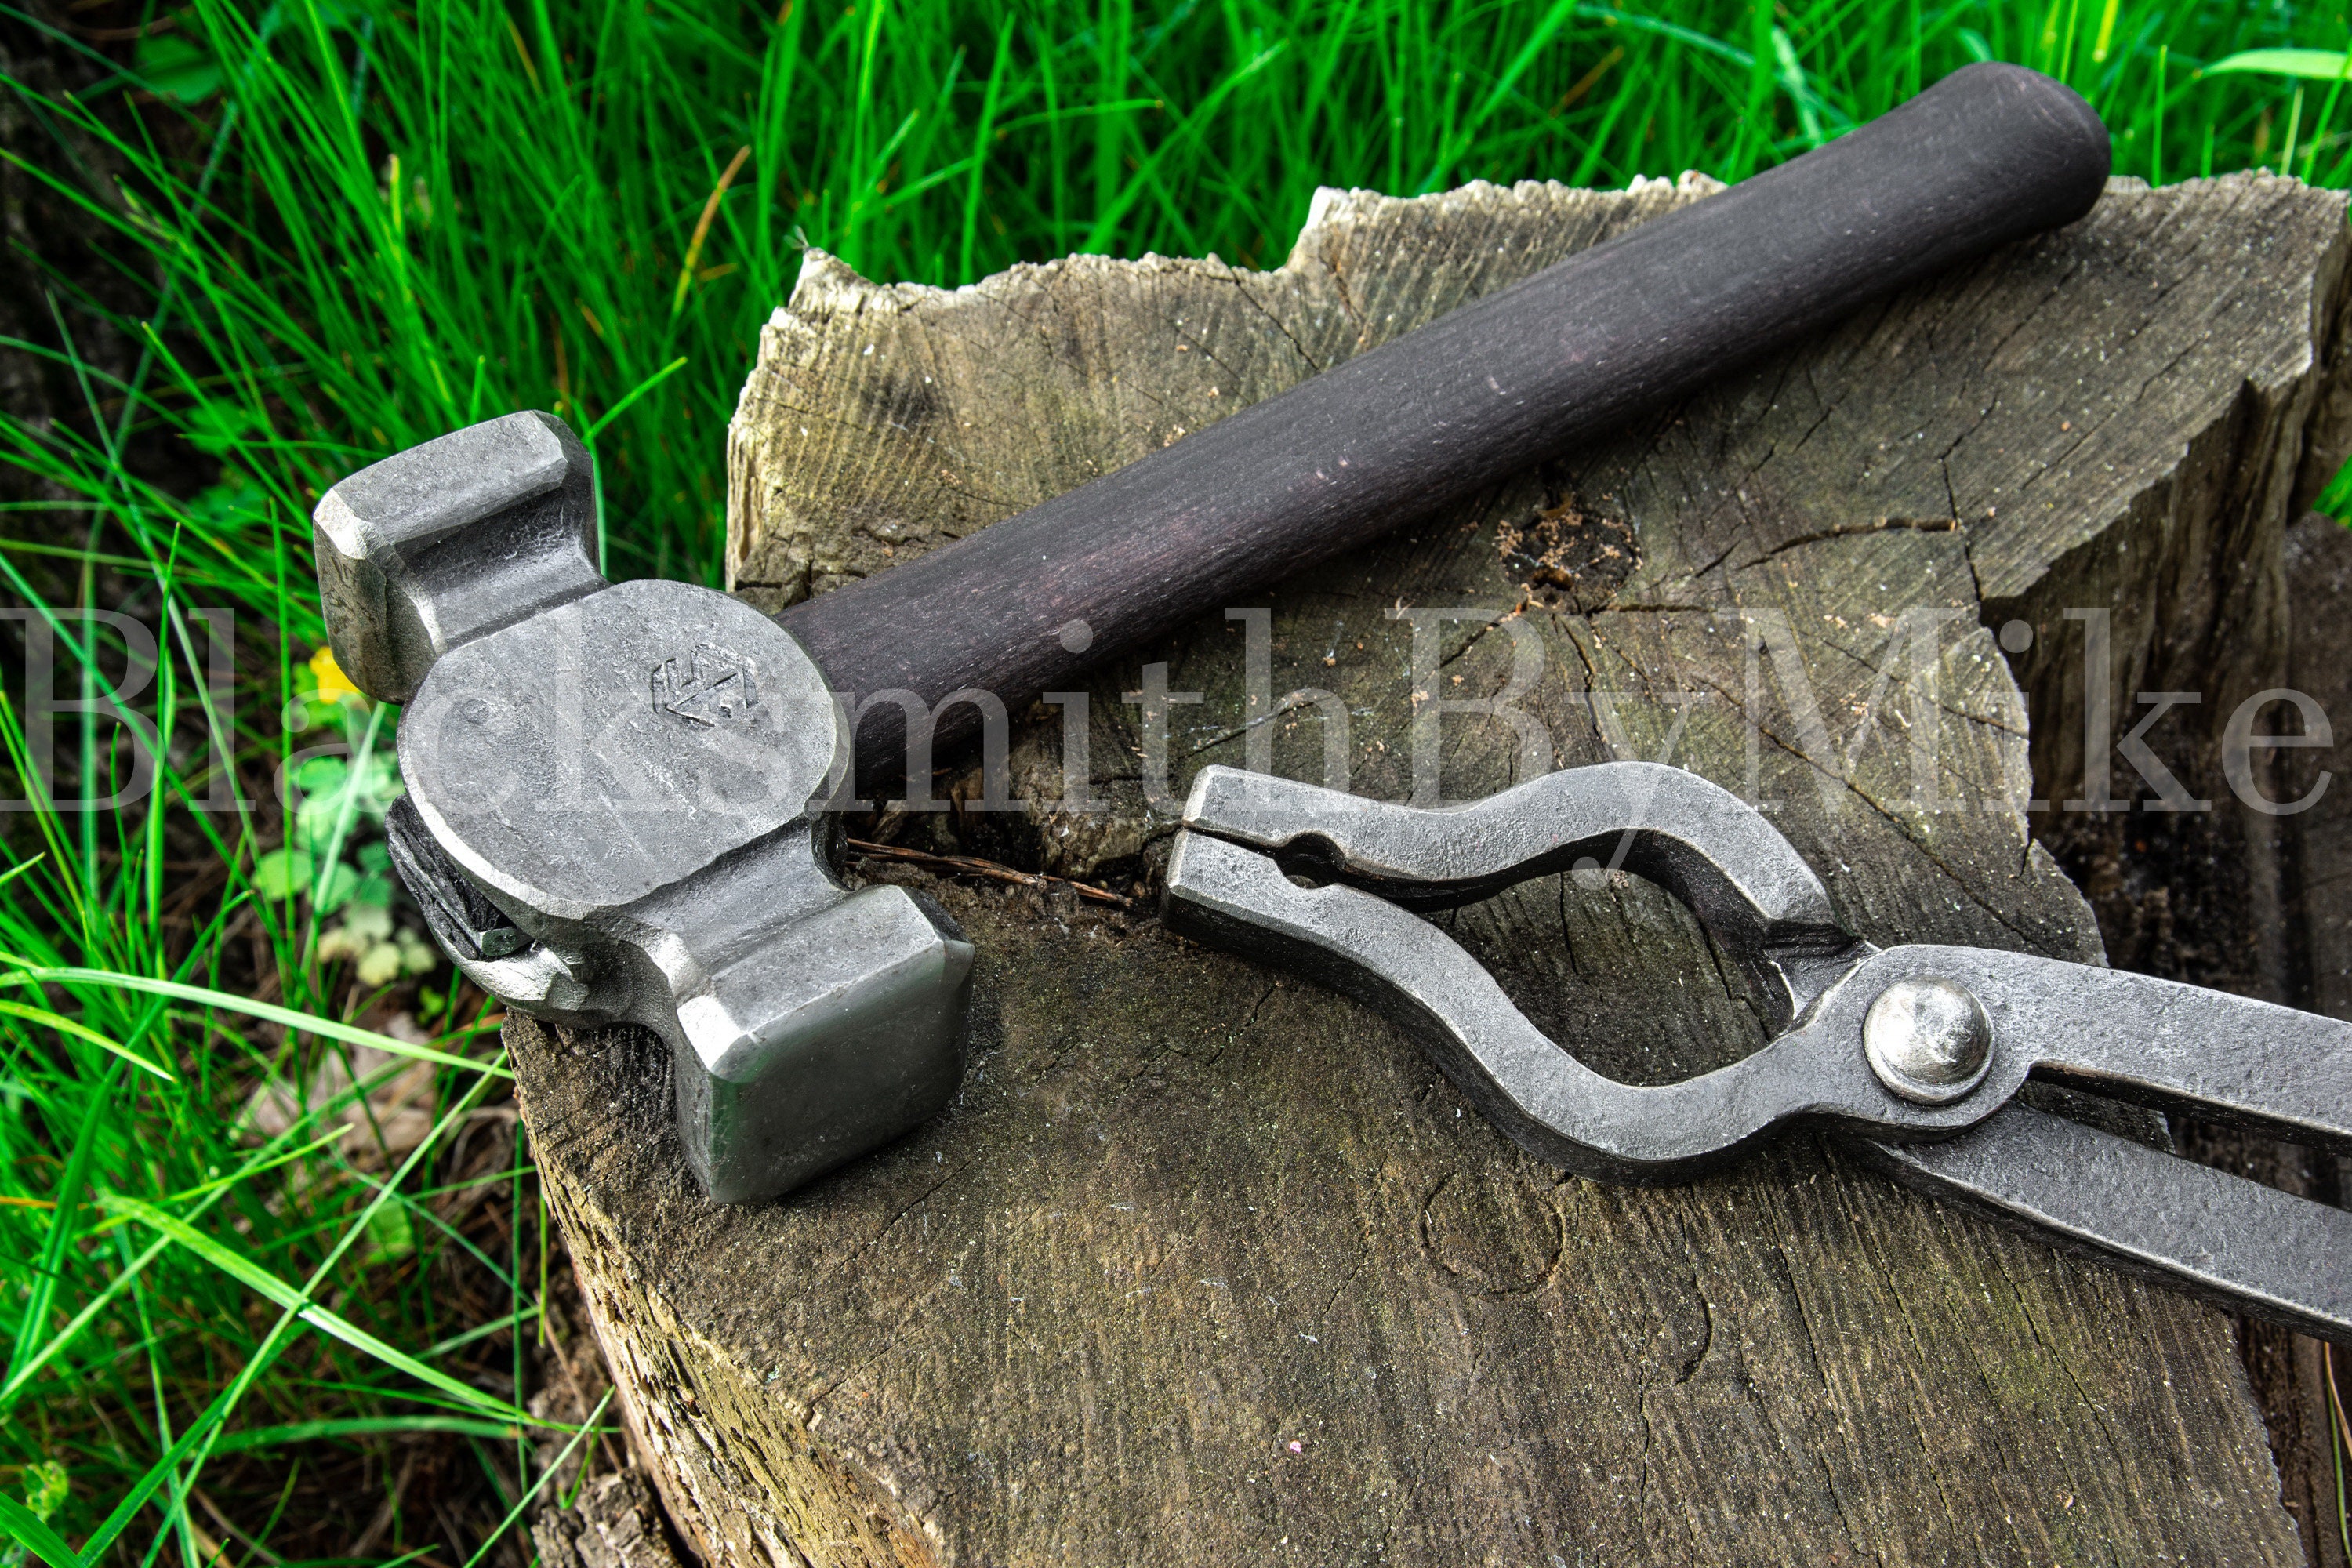 Blacksmith Round Hammer & Blacksmith Forge Tongs Universal SET Blacksmith  Tools Hammers With Personalization 